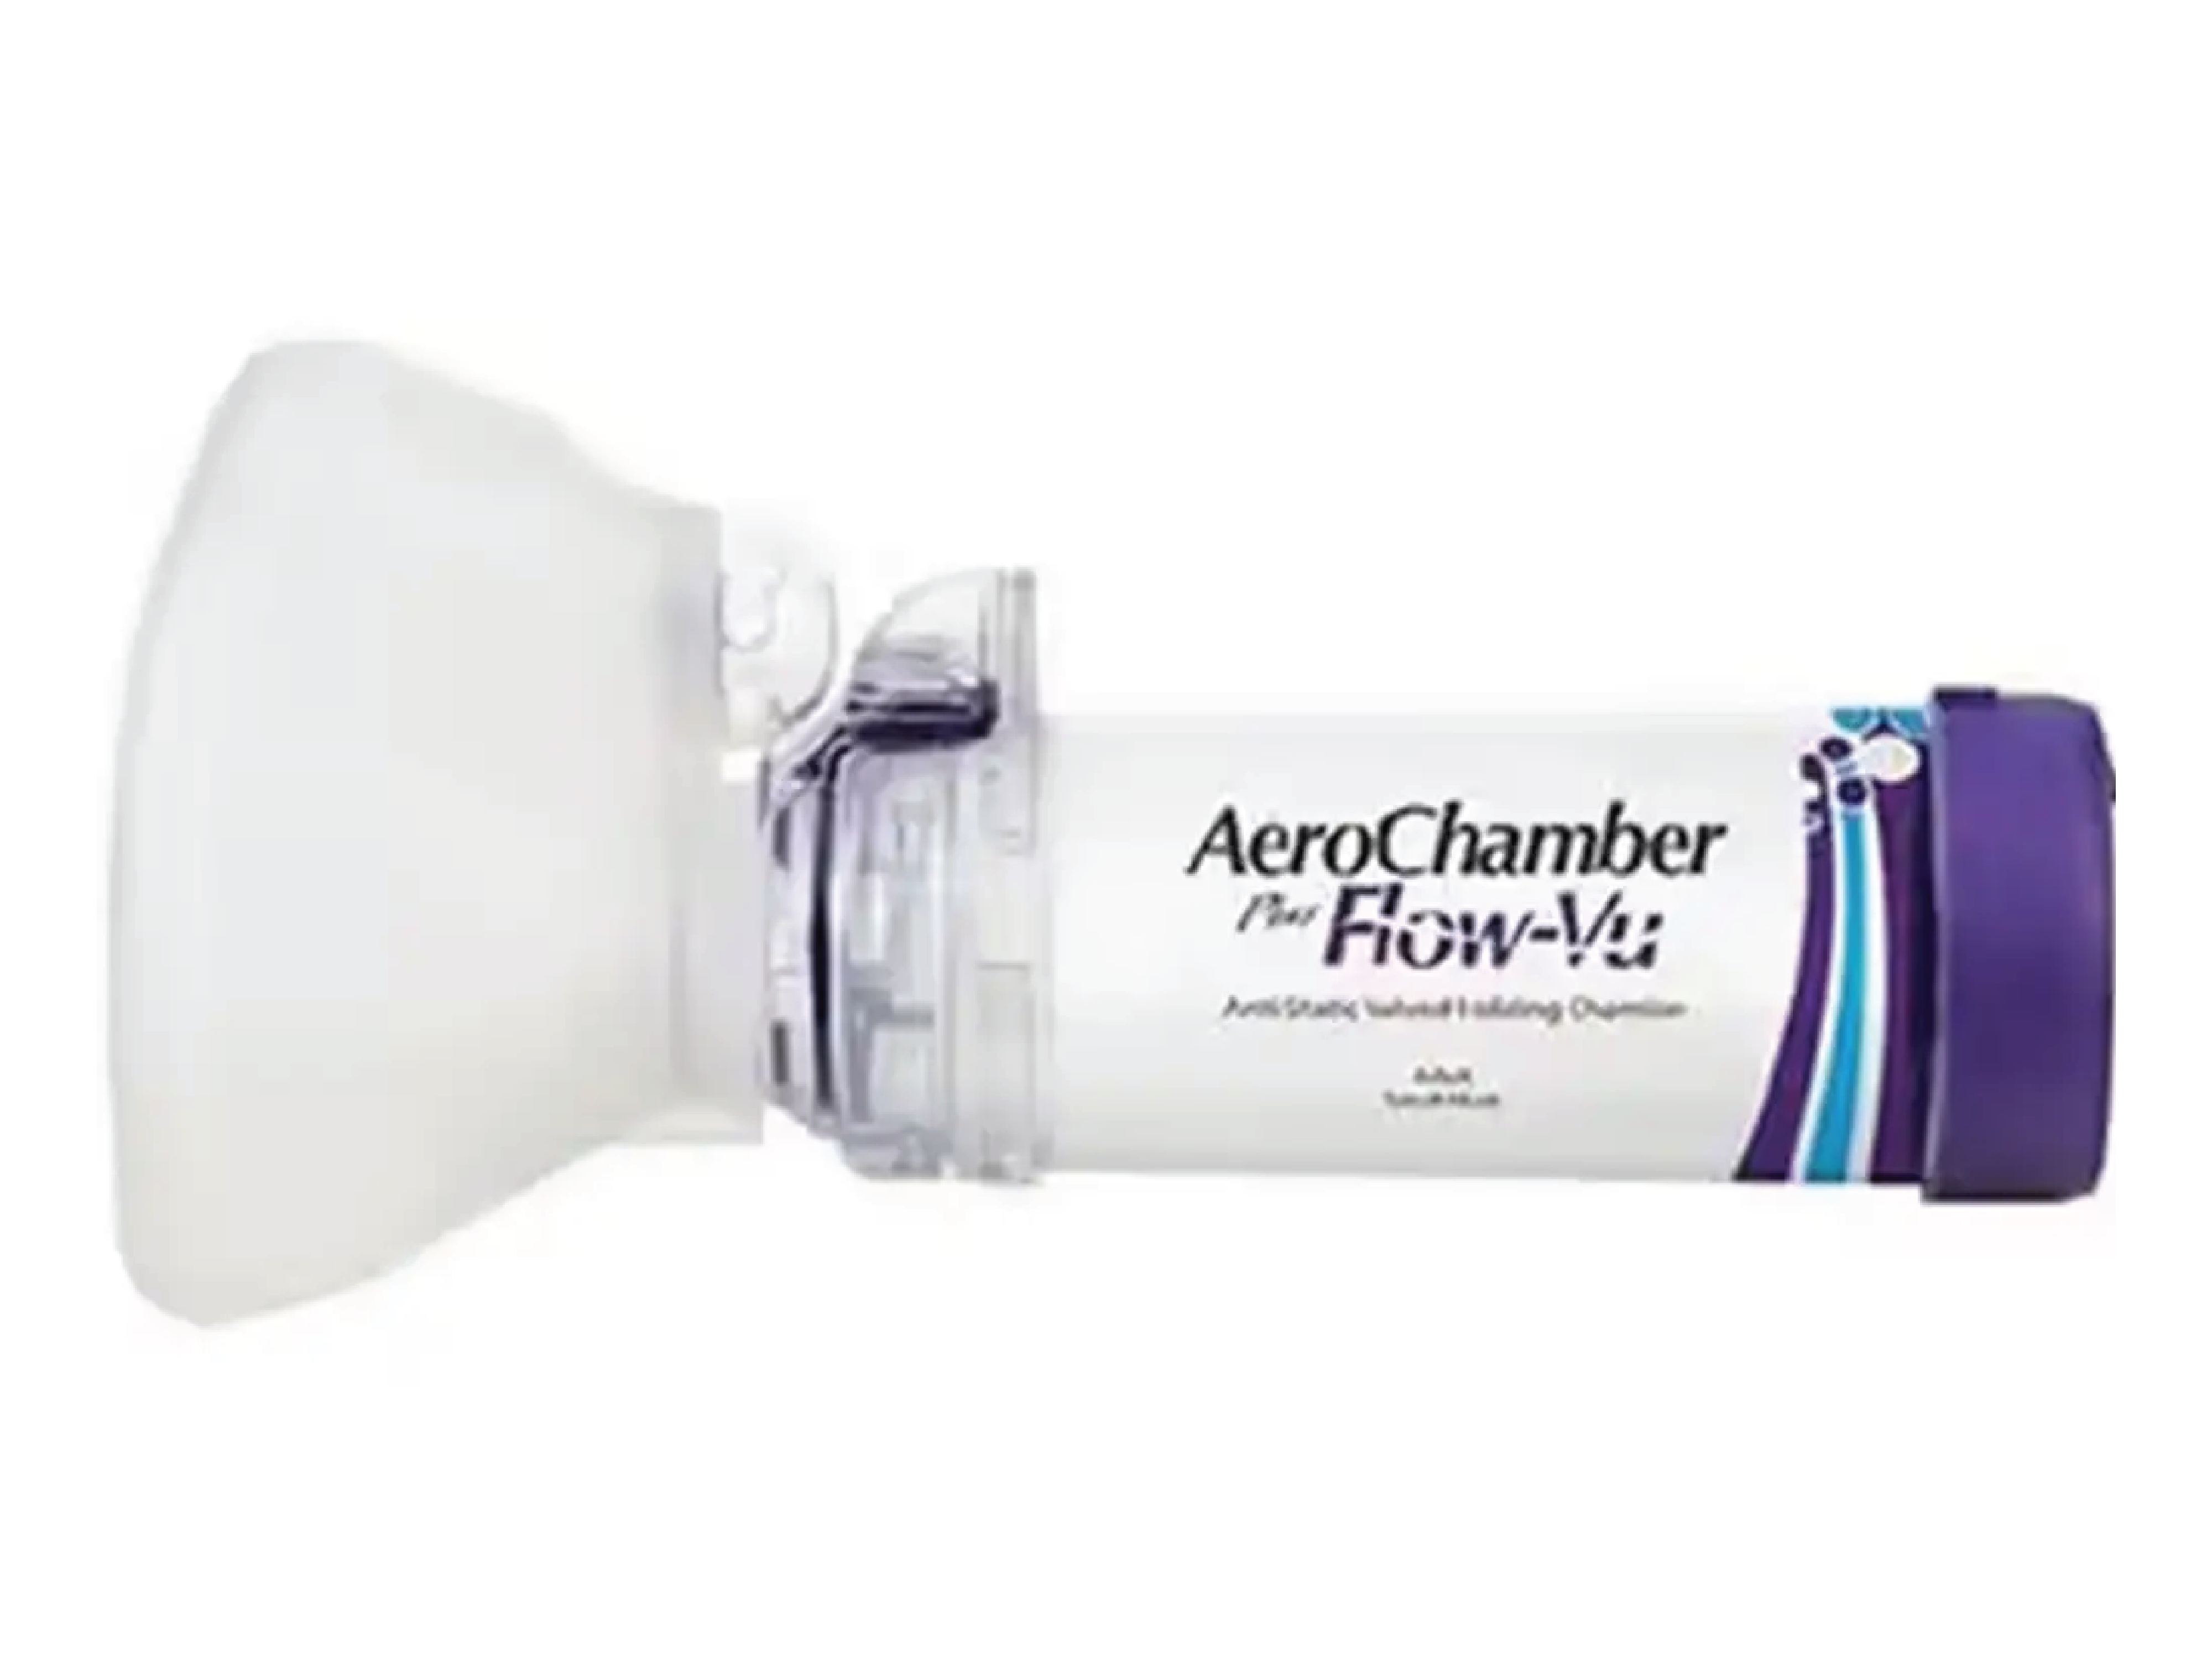 Aerochamber PlusFlow-Vu maske, Inhalasjonskammer med liten maske, voksen, 1 stk